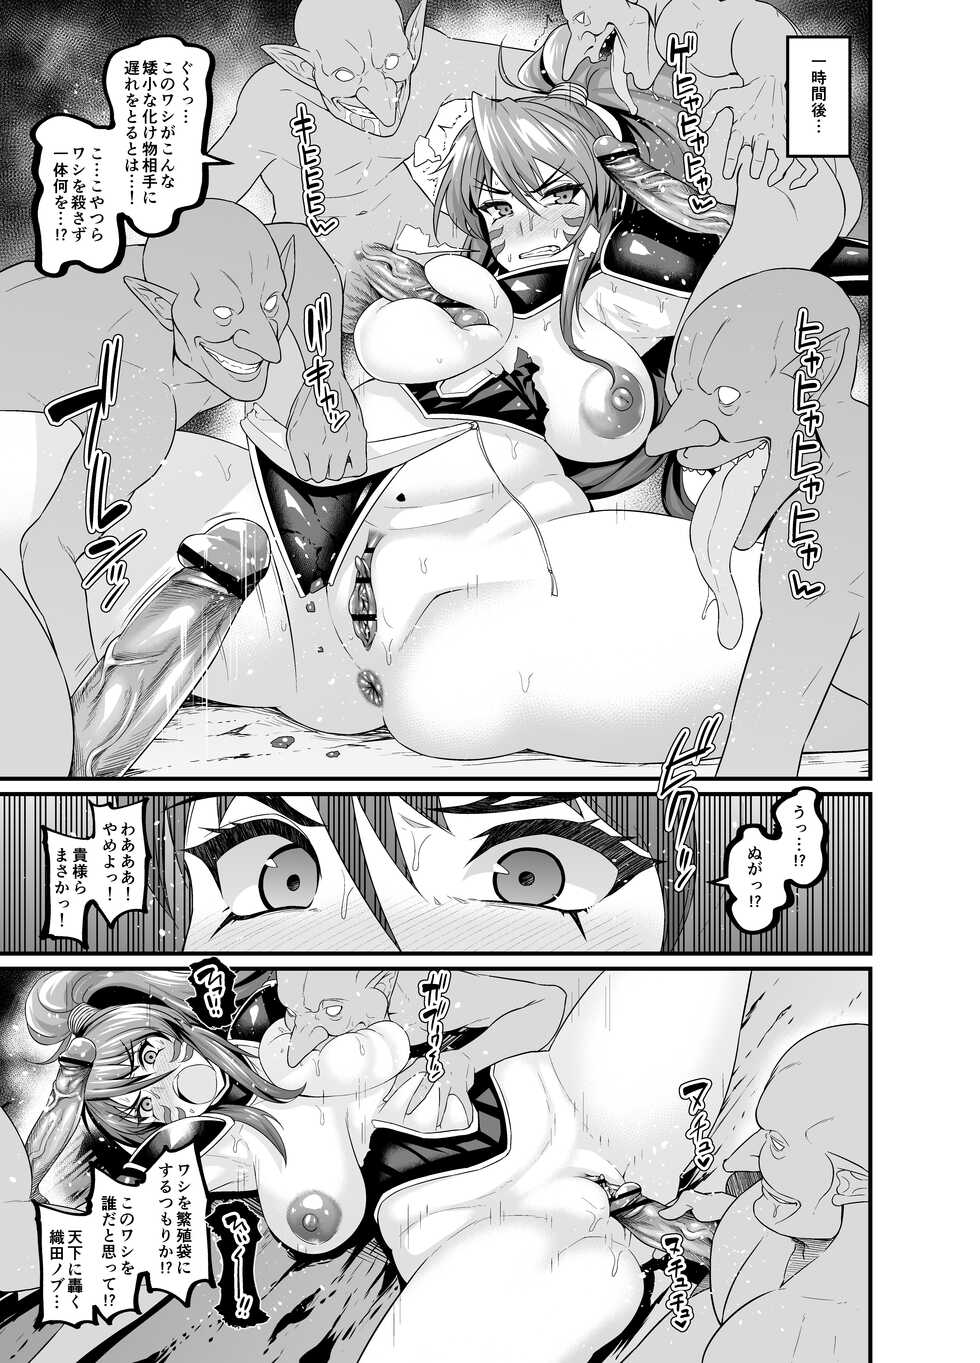 [Ankoman] Oda Nobunaga vs Goblins (Sengoku Otome) - Page 3